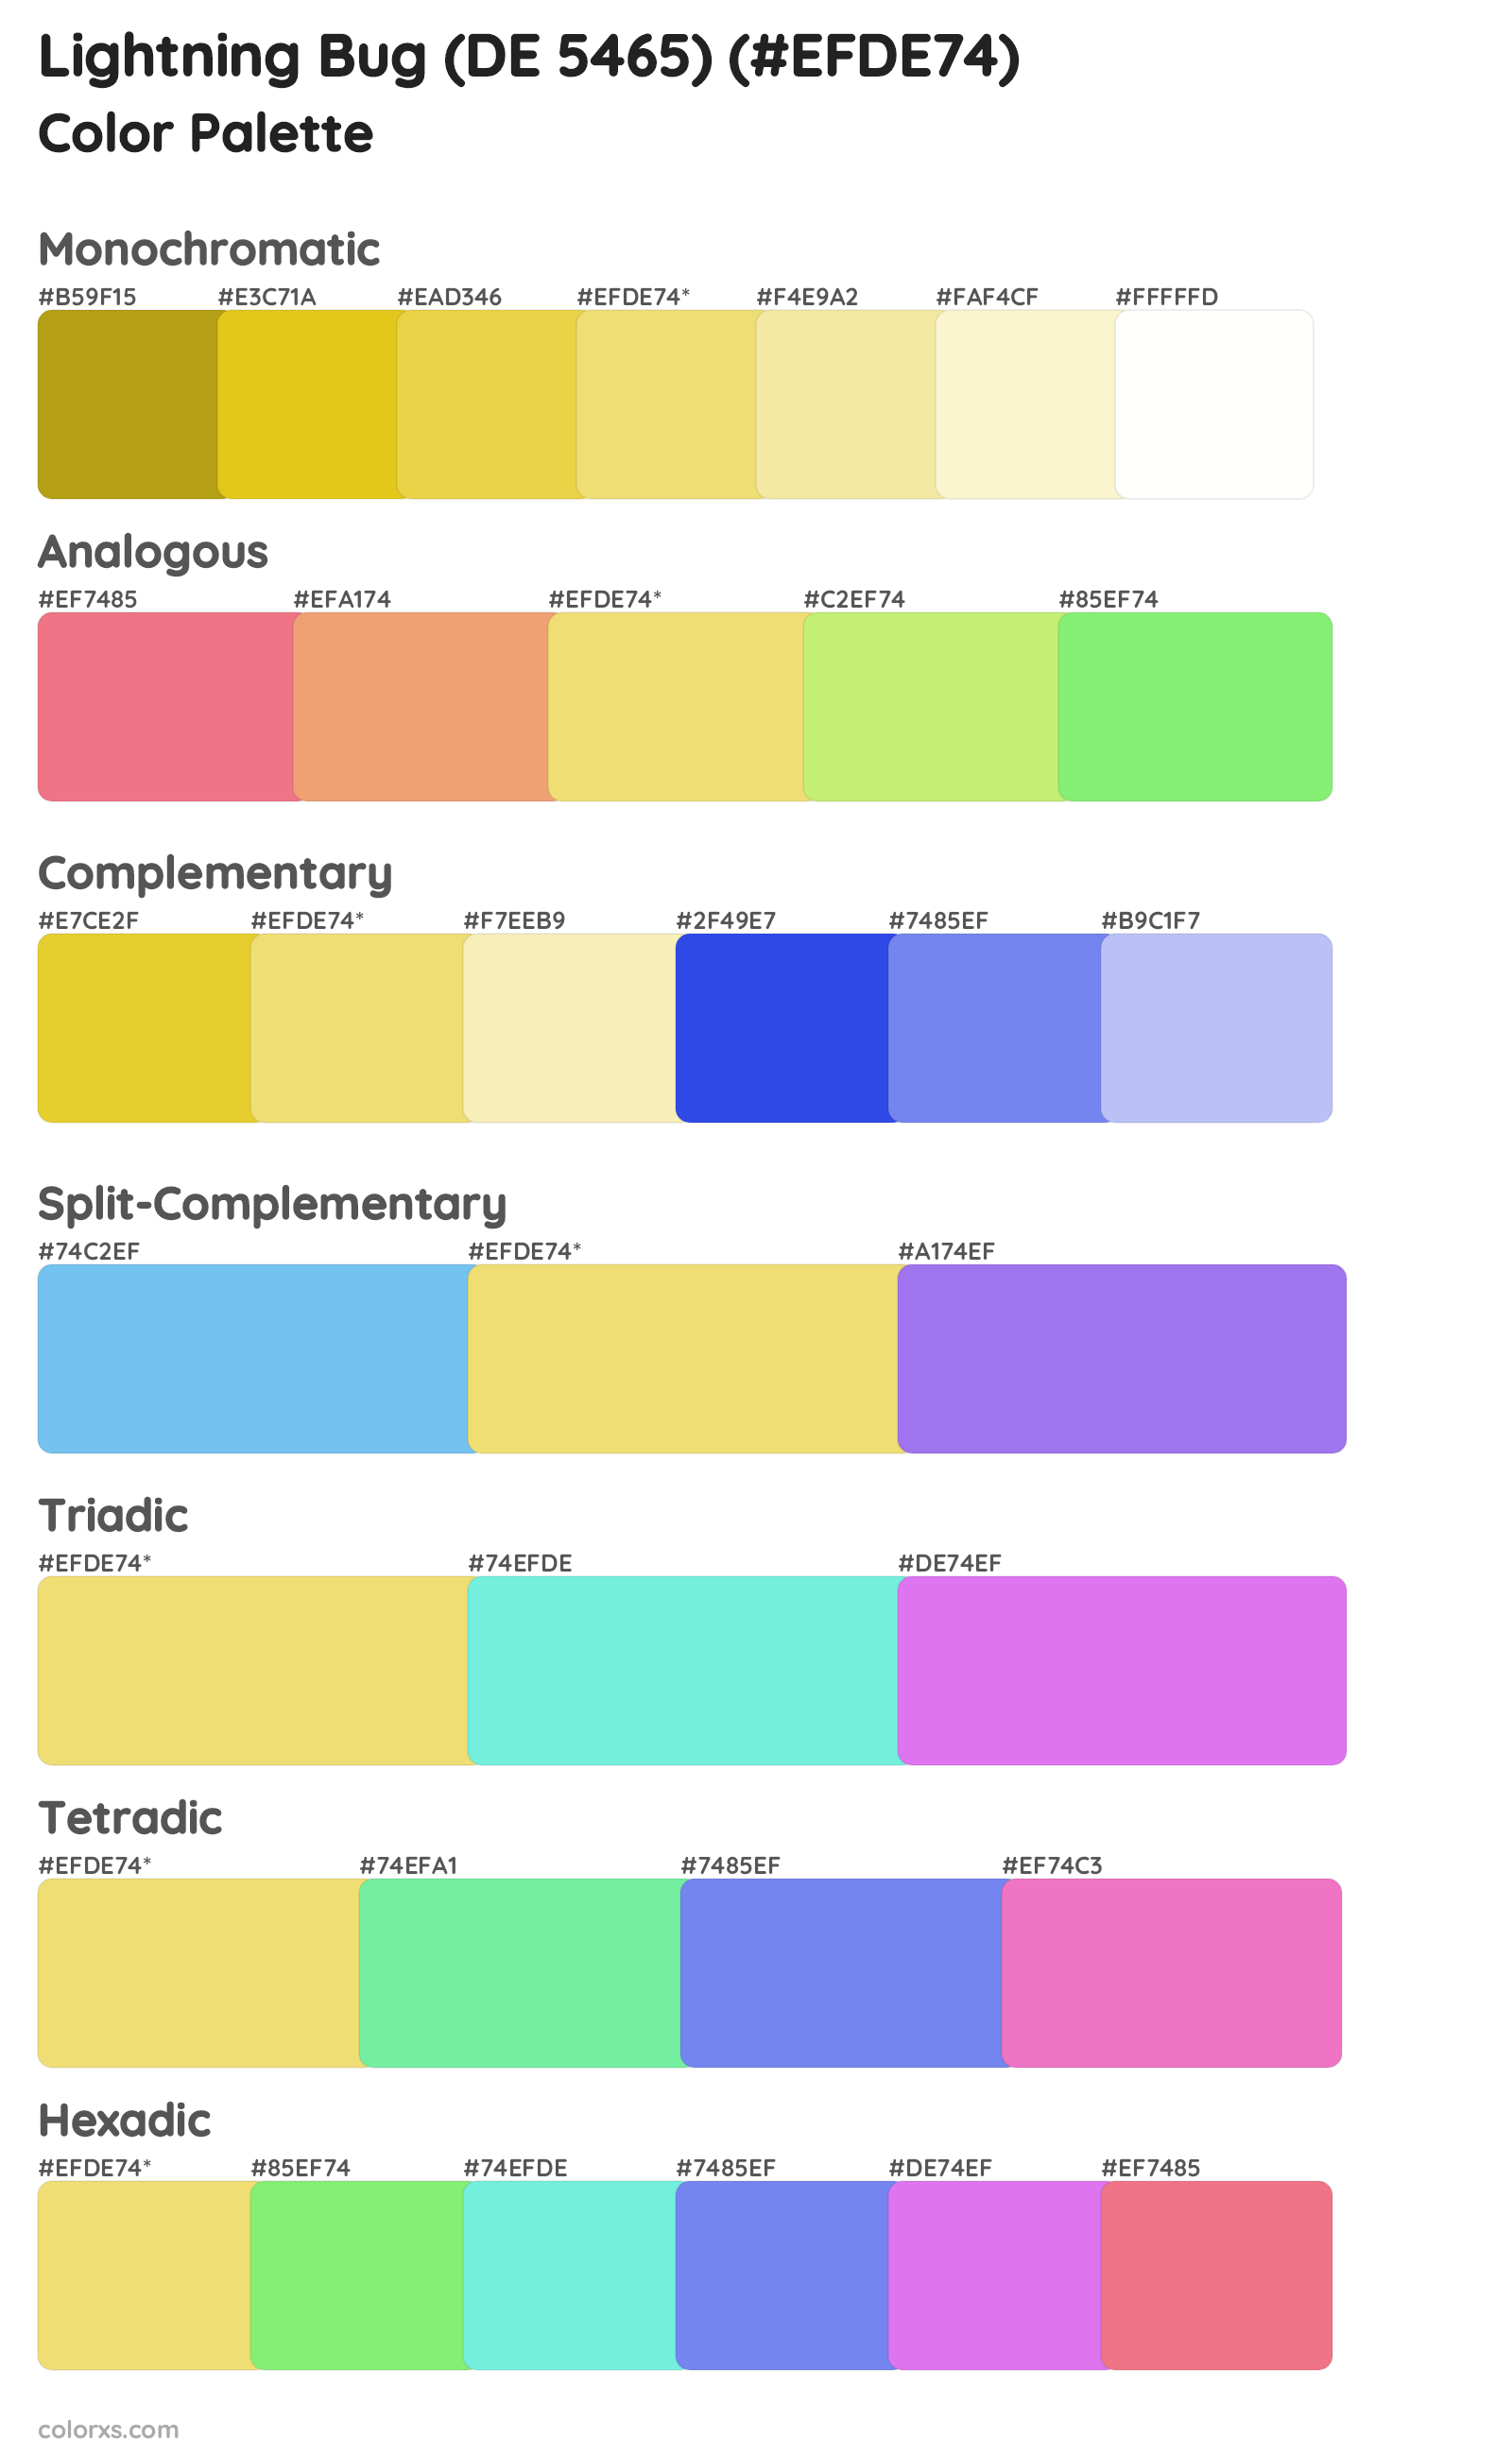 Lightning Bug (DE 5465) Color Scheme Palettes